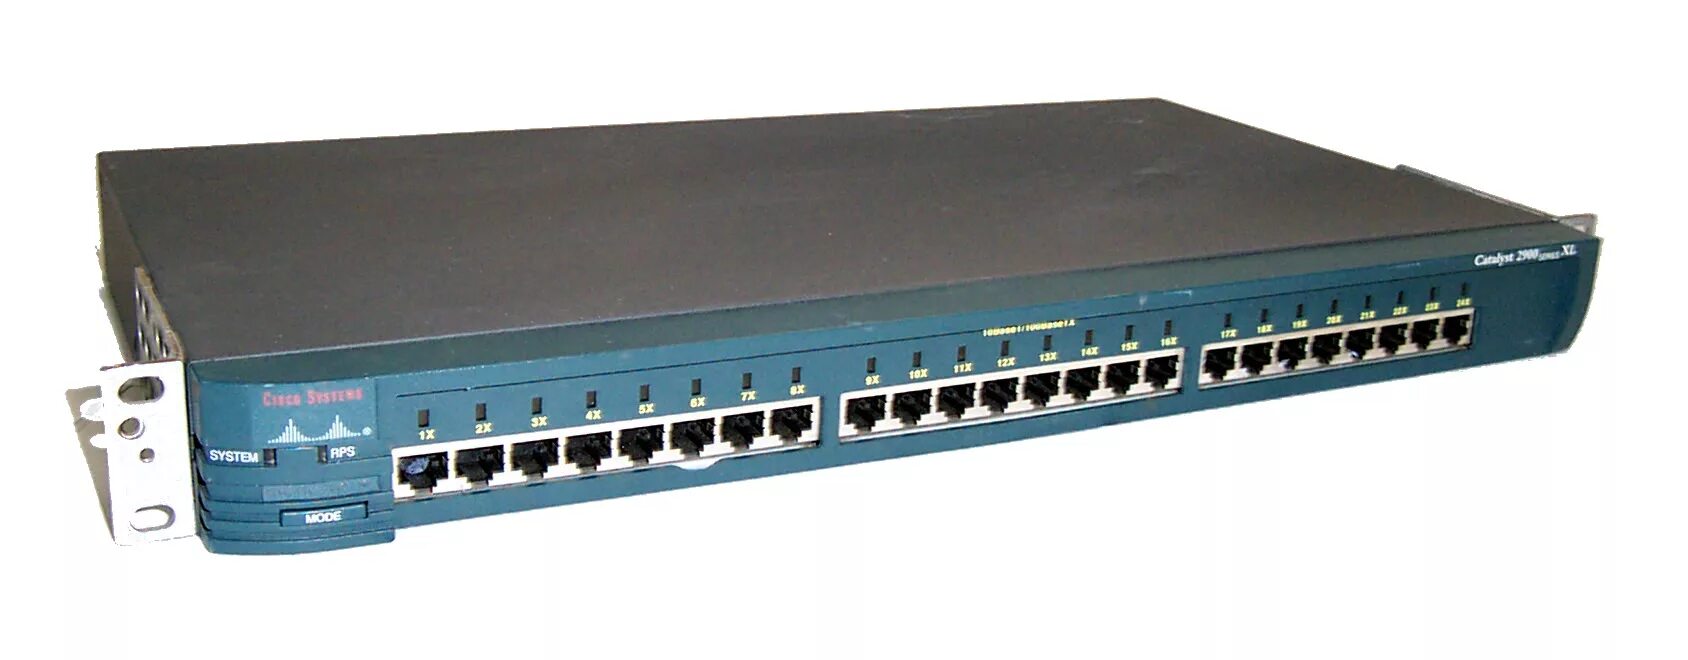 Series 24. Cisco Catalyst 3500xl. Cisco Catalyst 2900. WS-c2924-XL. Коммутатор Cisco 2900 1 RF XL.